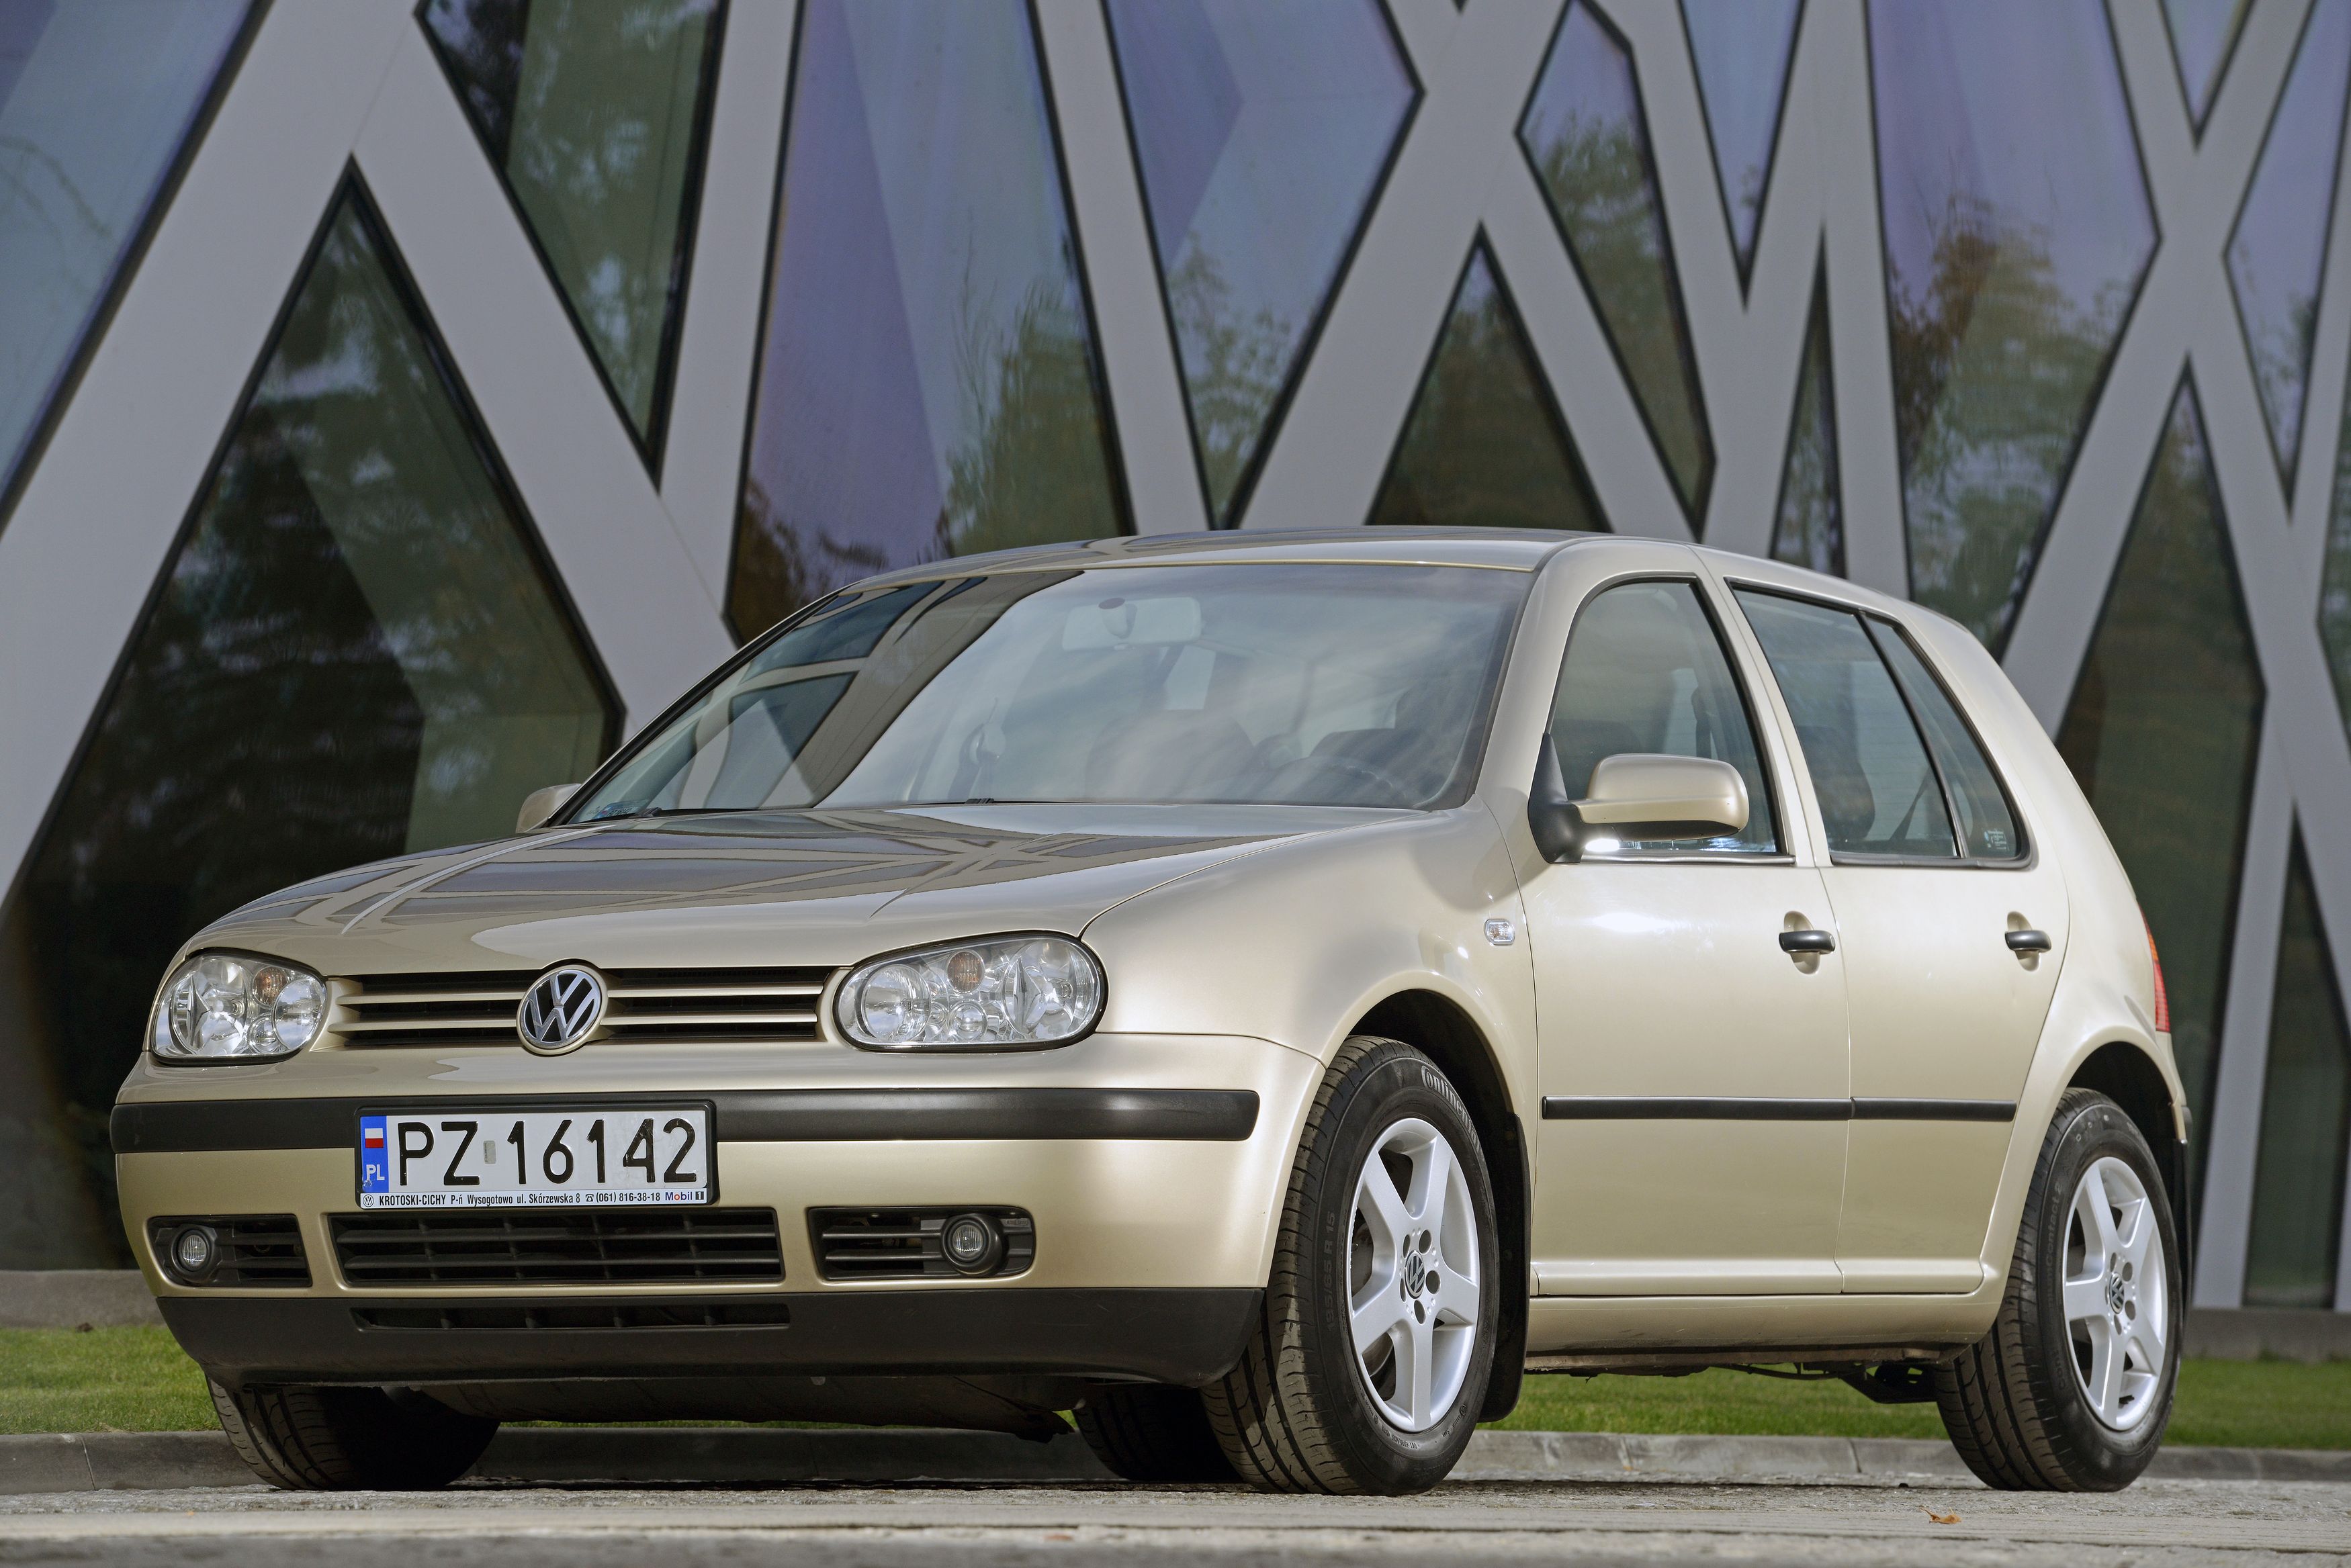 Volkswagen golf IV - 12. miejsce w kategorii aut 11 letnich